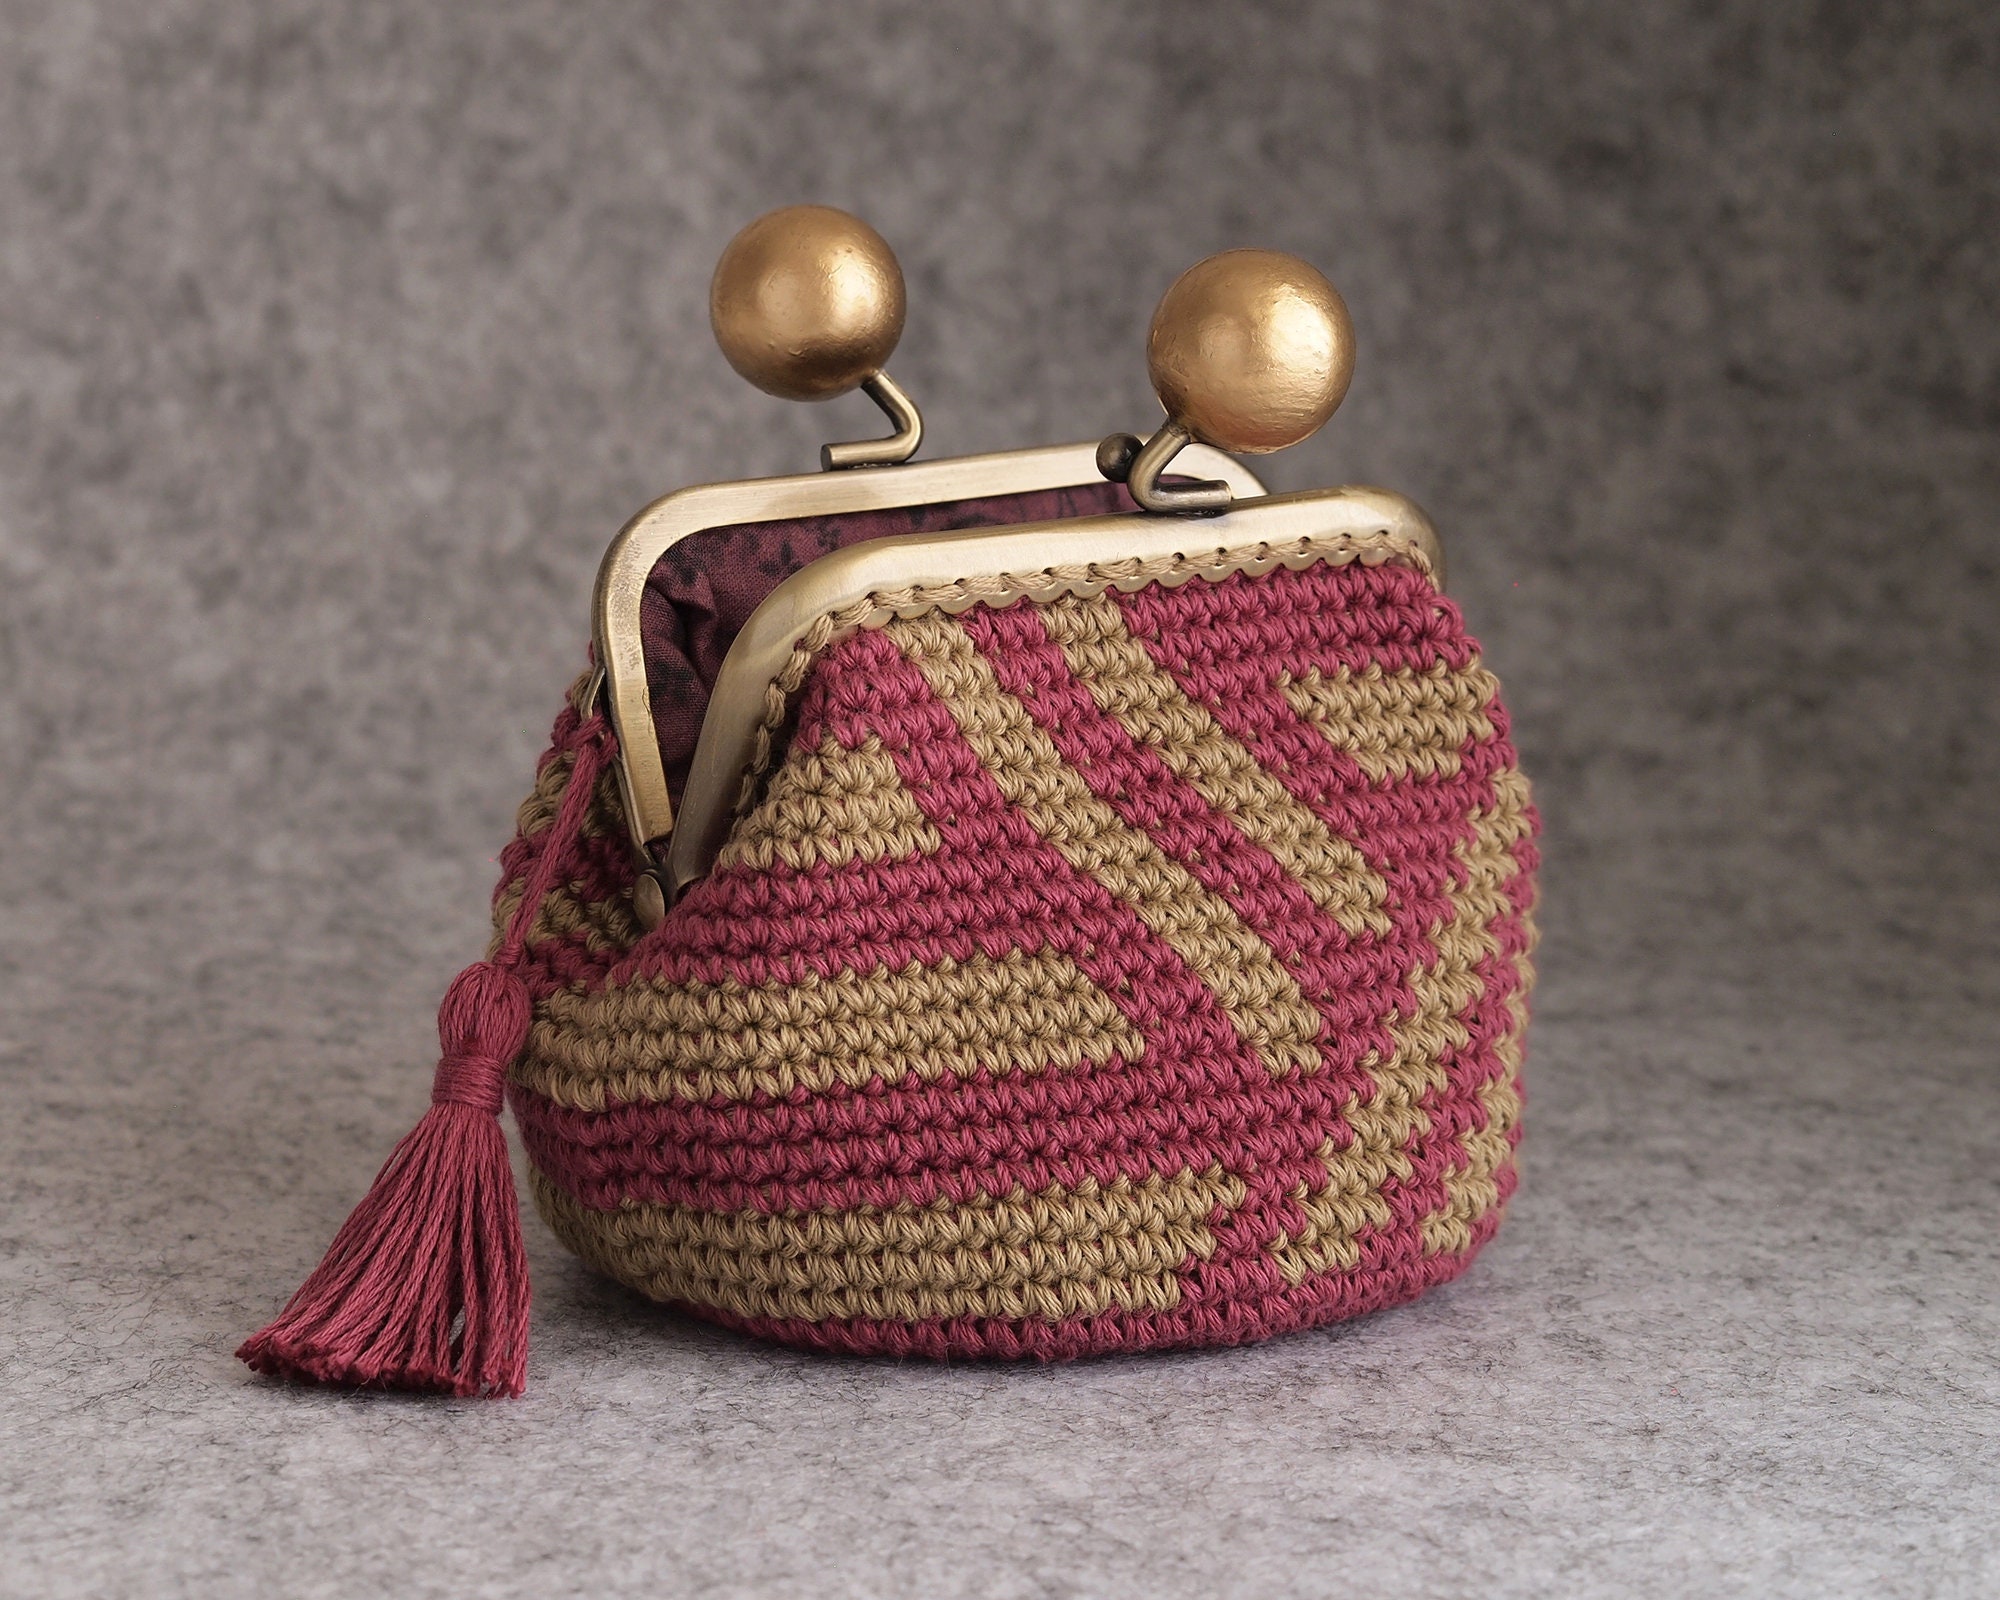 Beaded crochet kiss lock coin purse pattern by Ester Basimaker